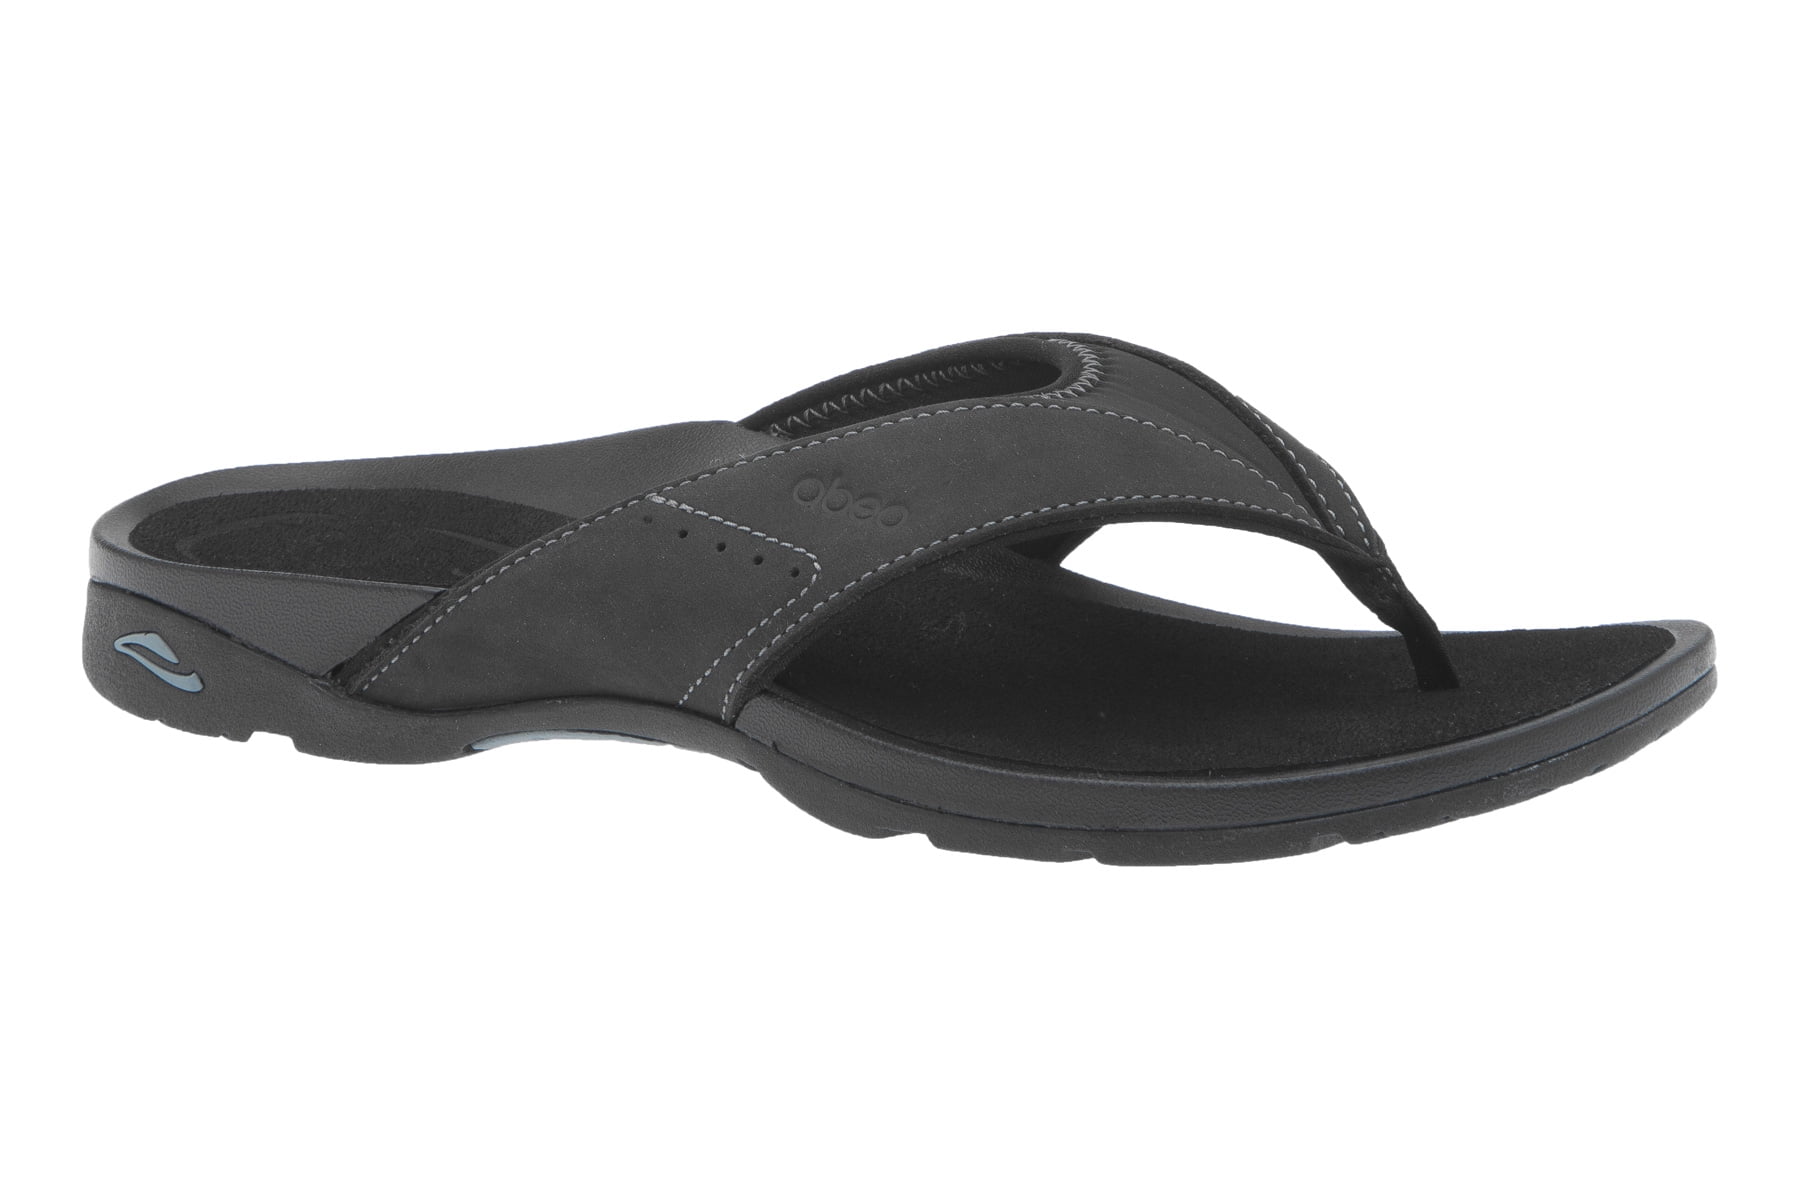 ABEO Balboa Neutral - Flip Flop Sandals in